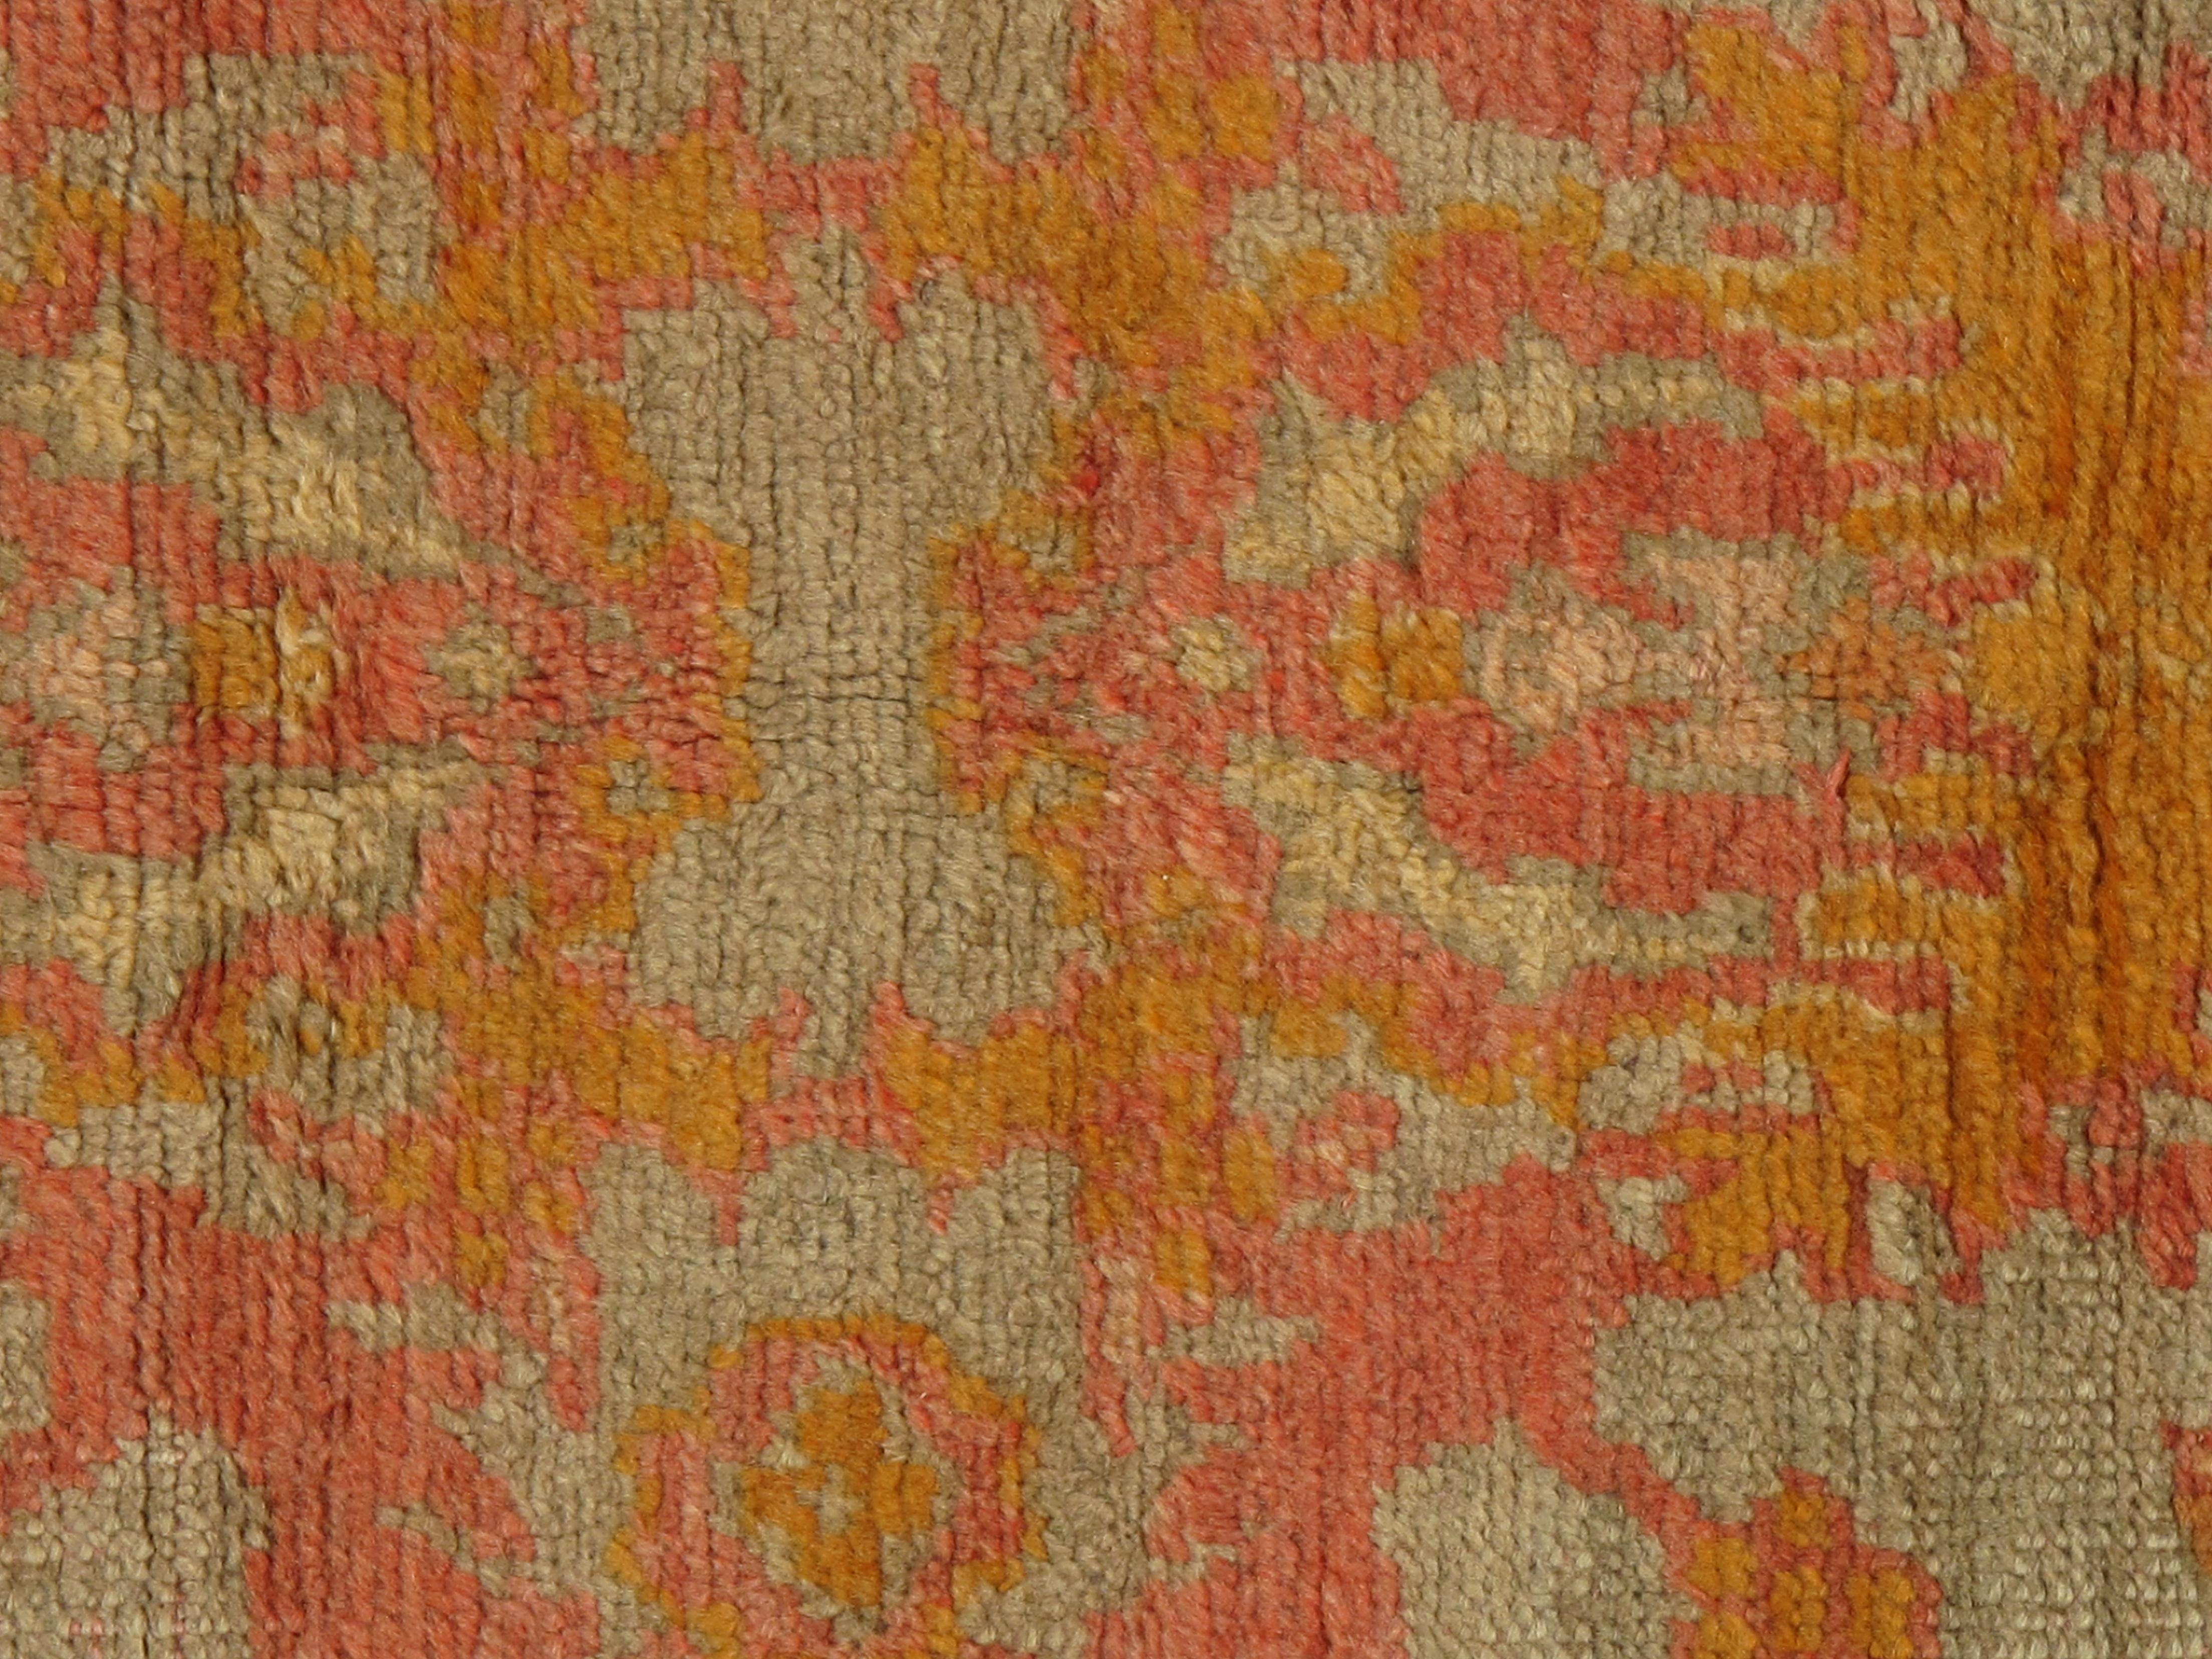 Antique Oushak Carpet, Handmade Turkish Oriental Rug, Saffron, Coral, Light Blue For Sale 8